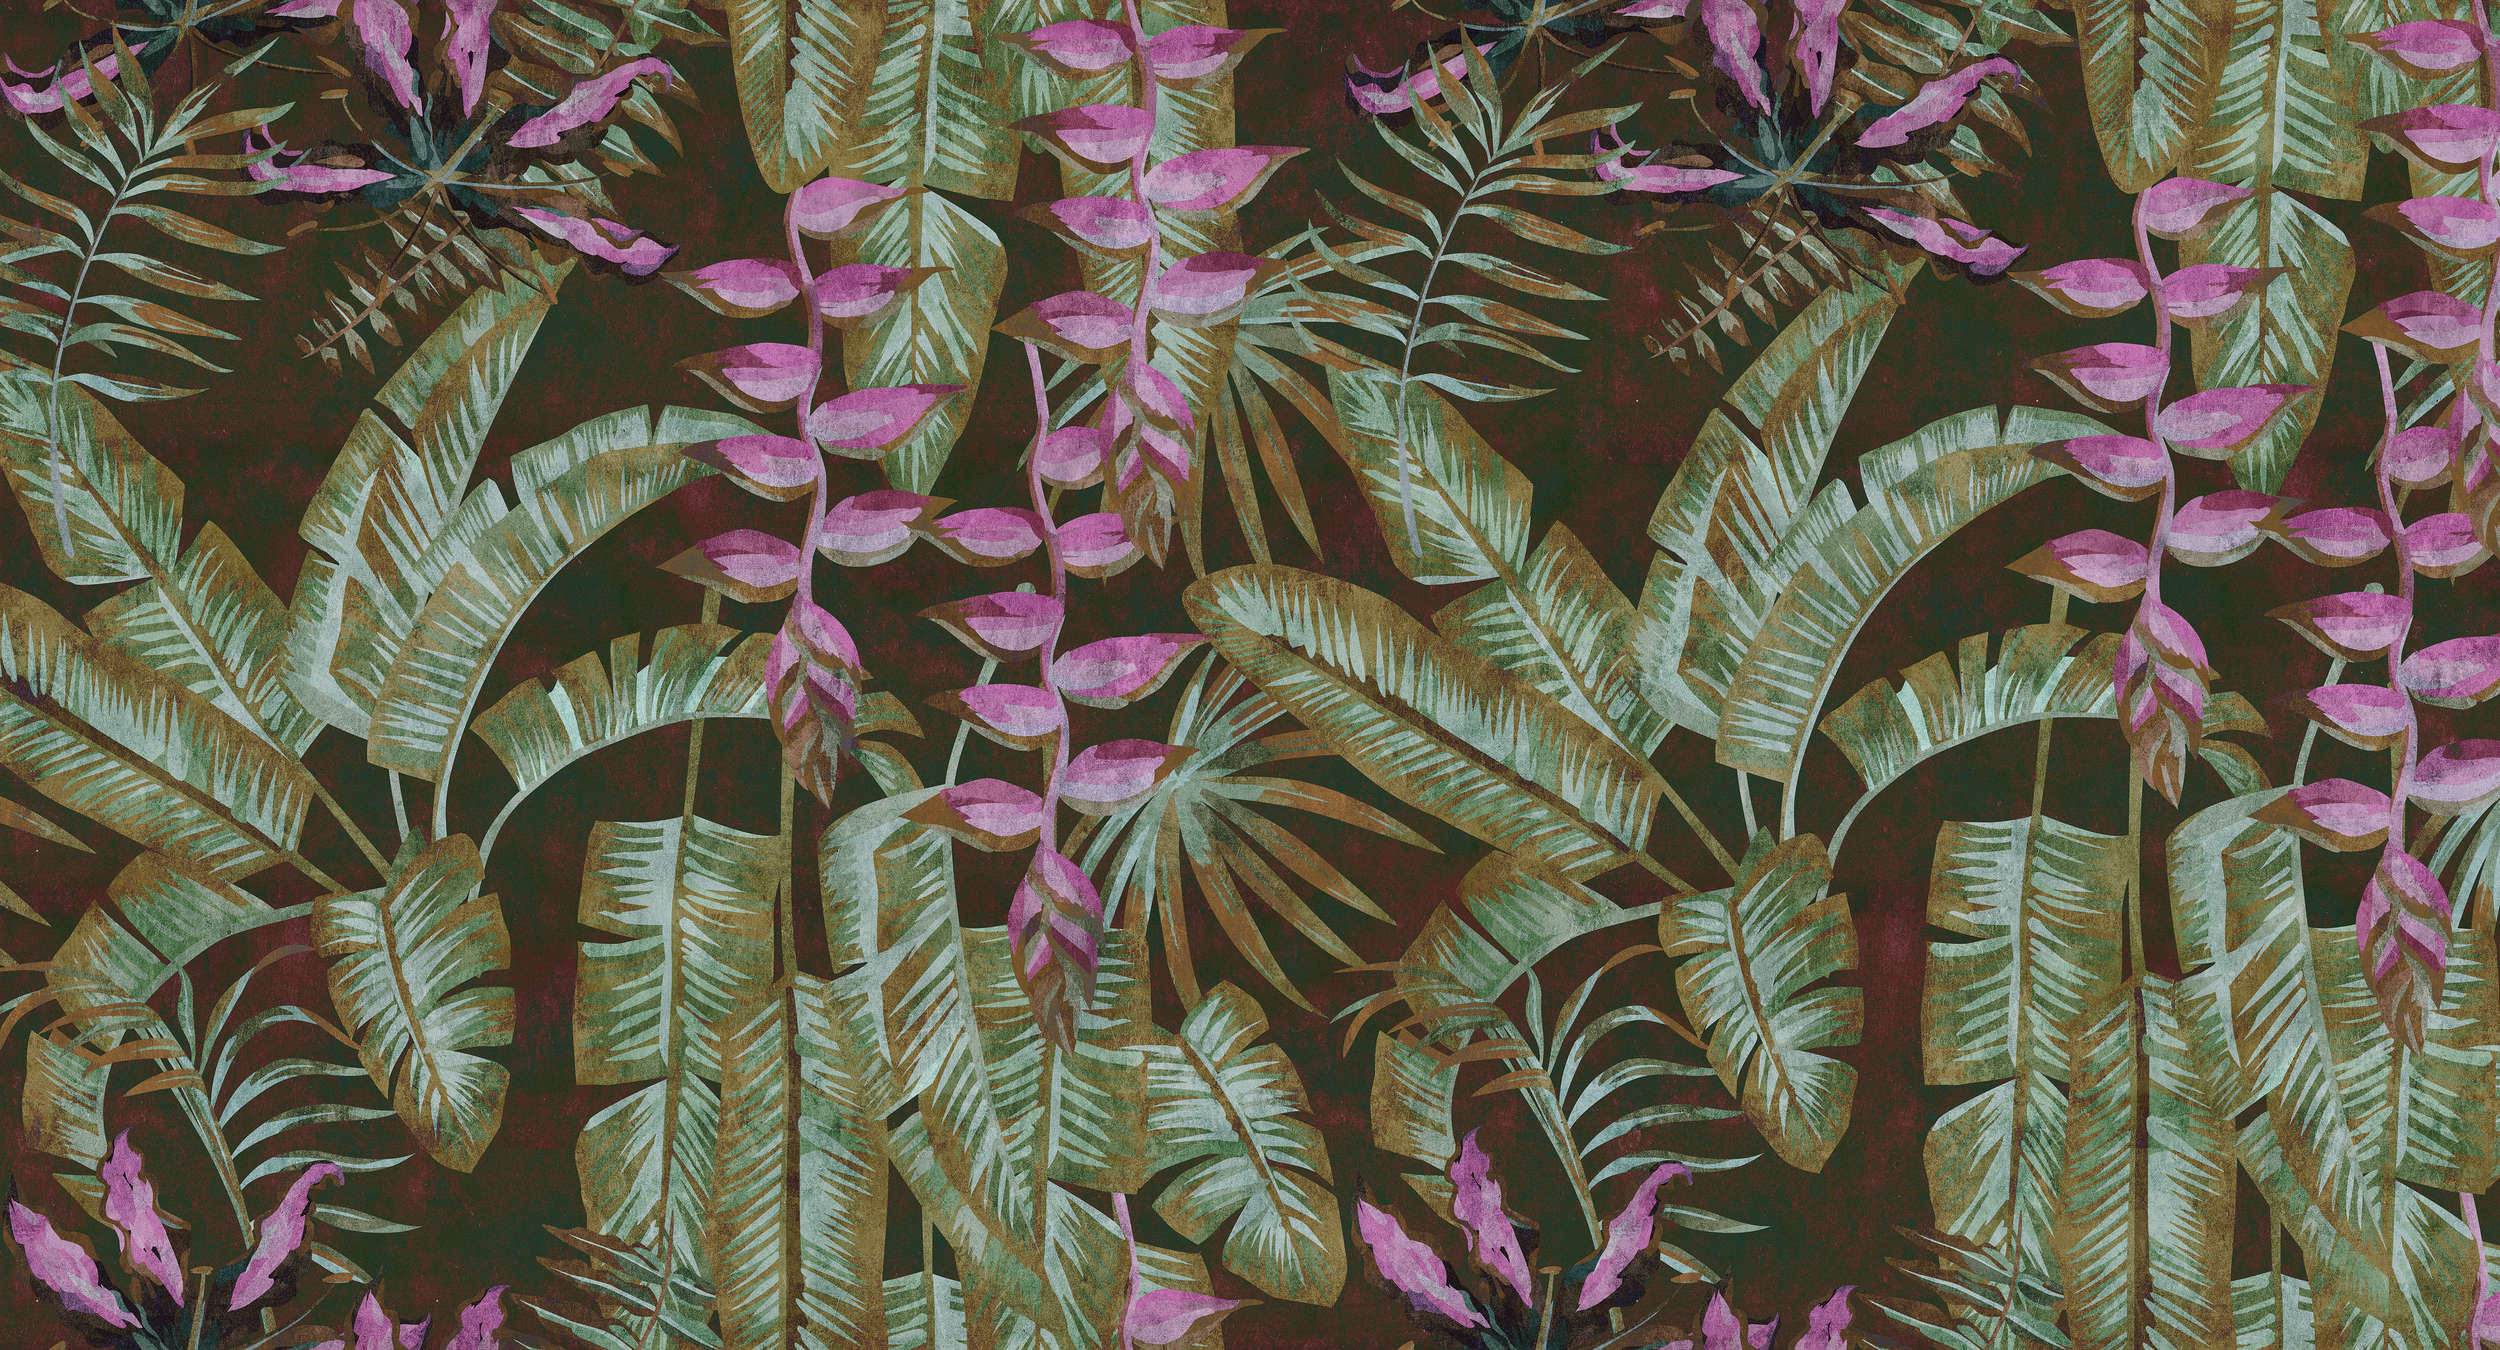             Tropicana 1 - Dschungel Fototapete mit Bananenblättern & Farnen-Löschpapier Struktur – Grün, Violett | Mattes Glattvlies
        